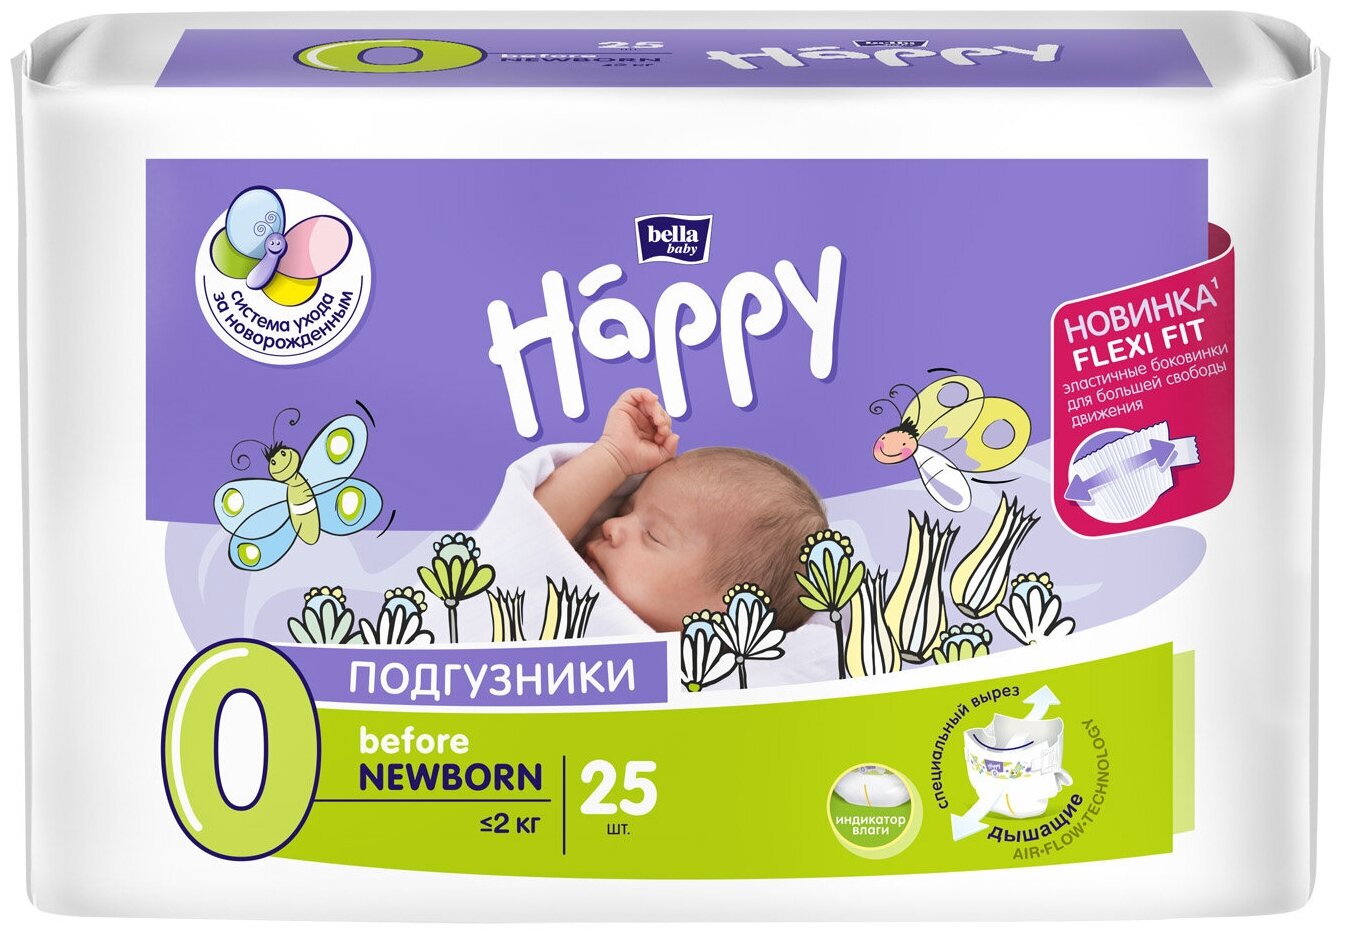 bella baby Happy Подгузники детские "bella baby Happy" Before Newborn, 25 шт./уп., вес менее 2 кг